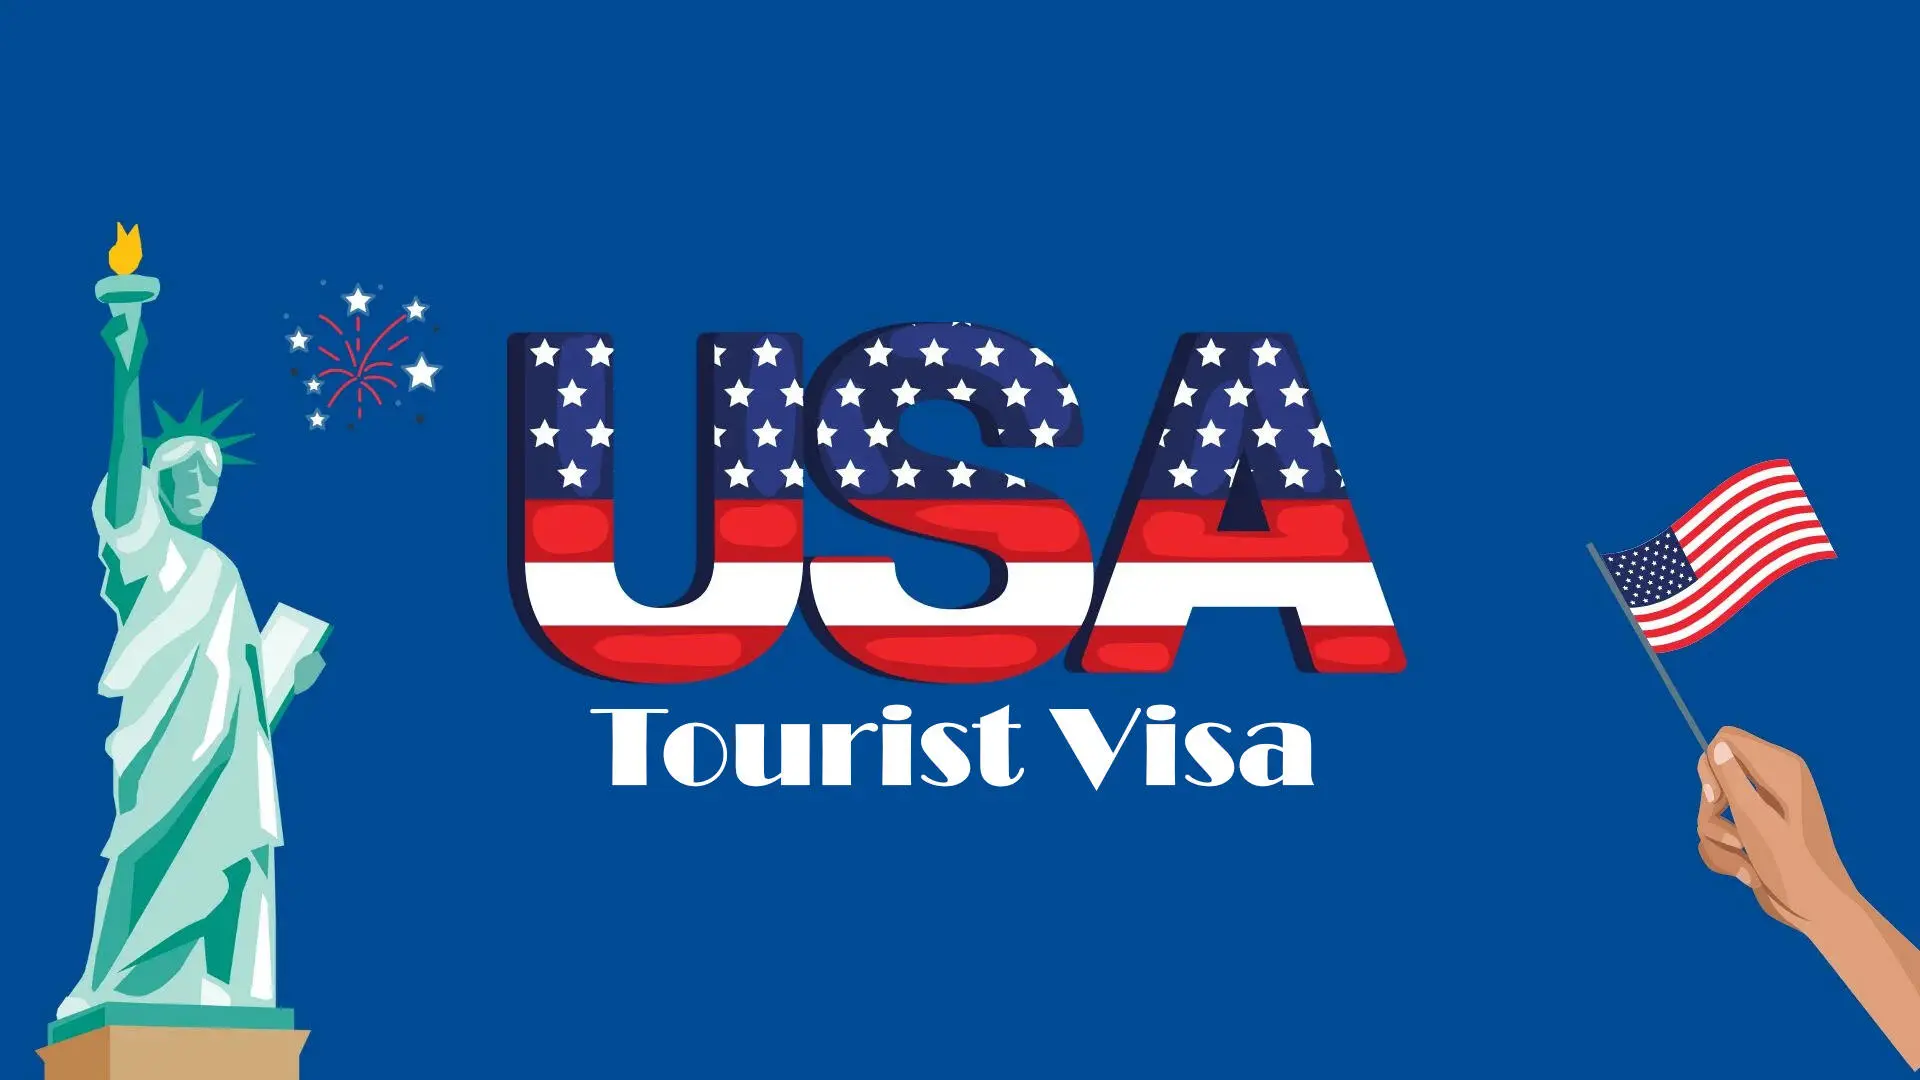 USA Tourist Visa